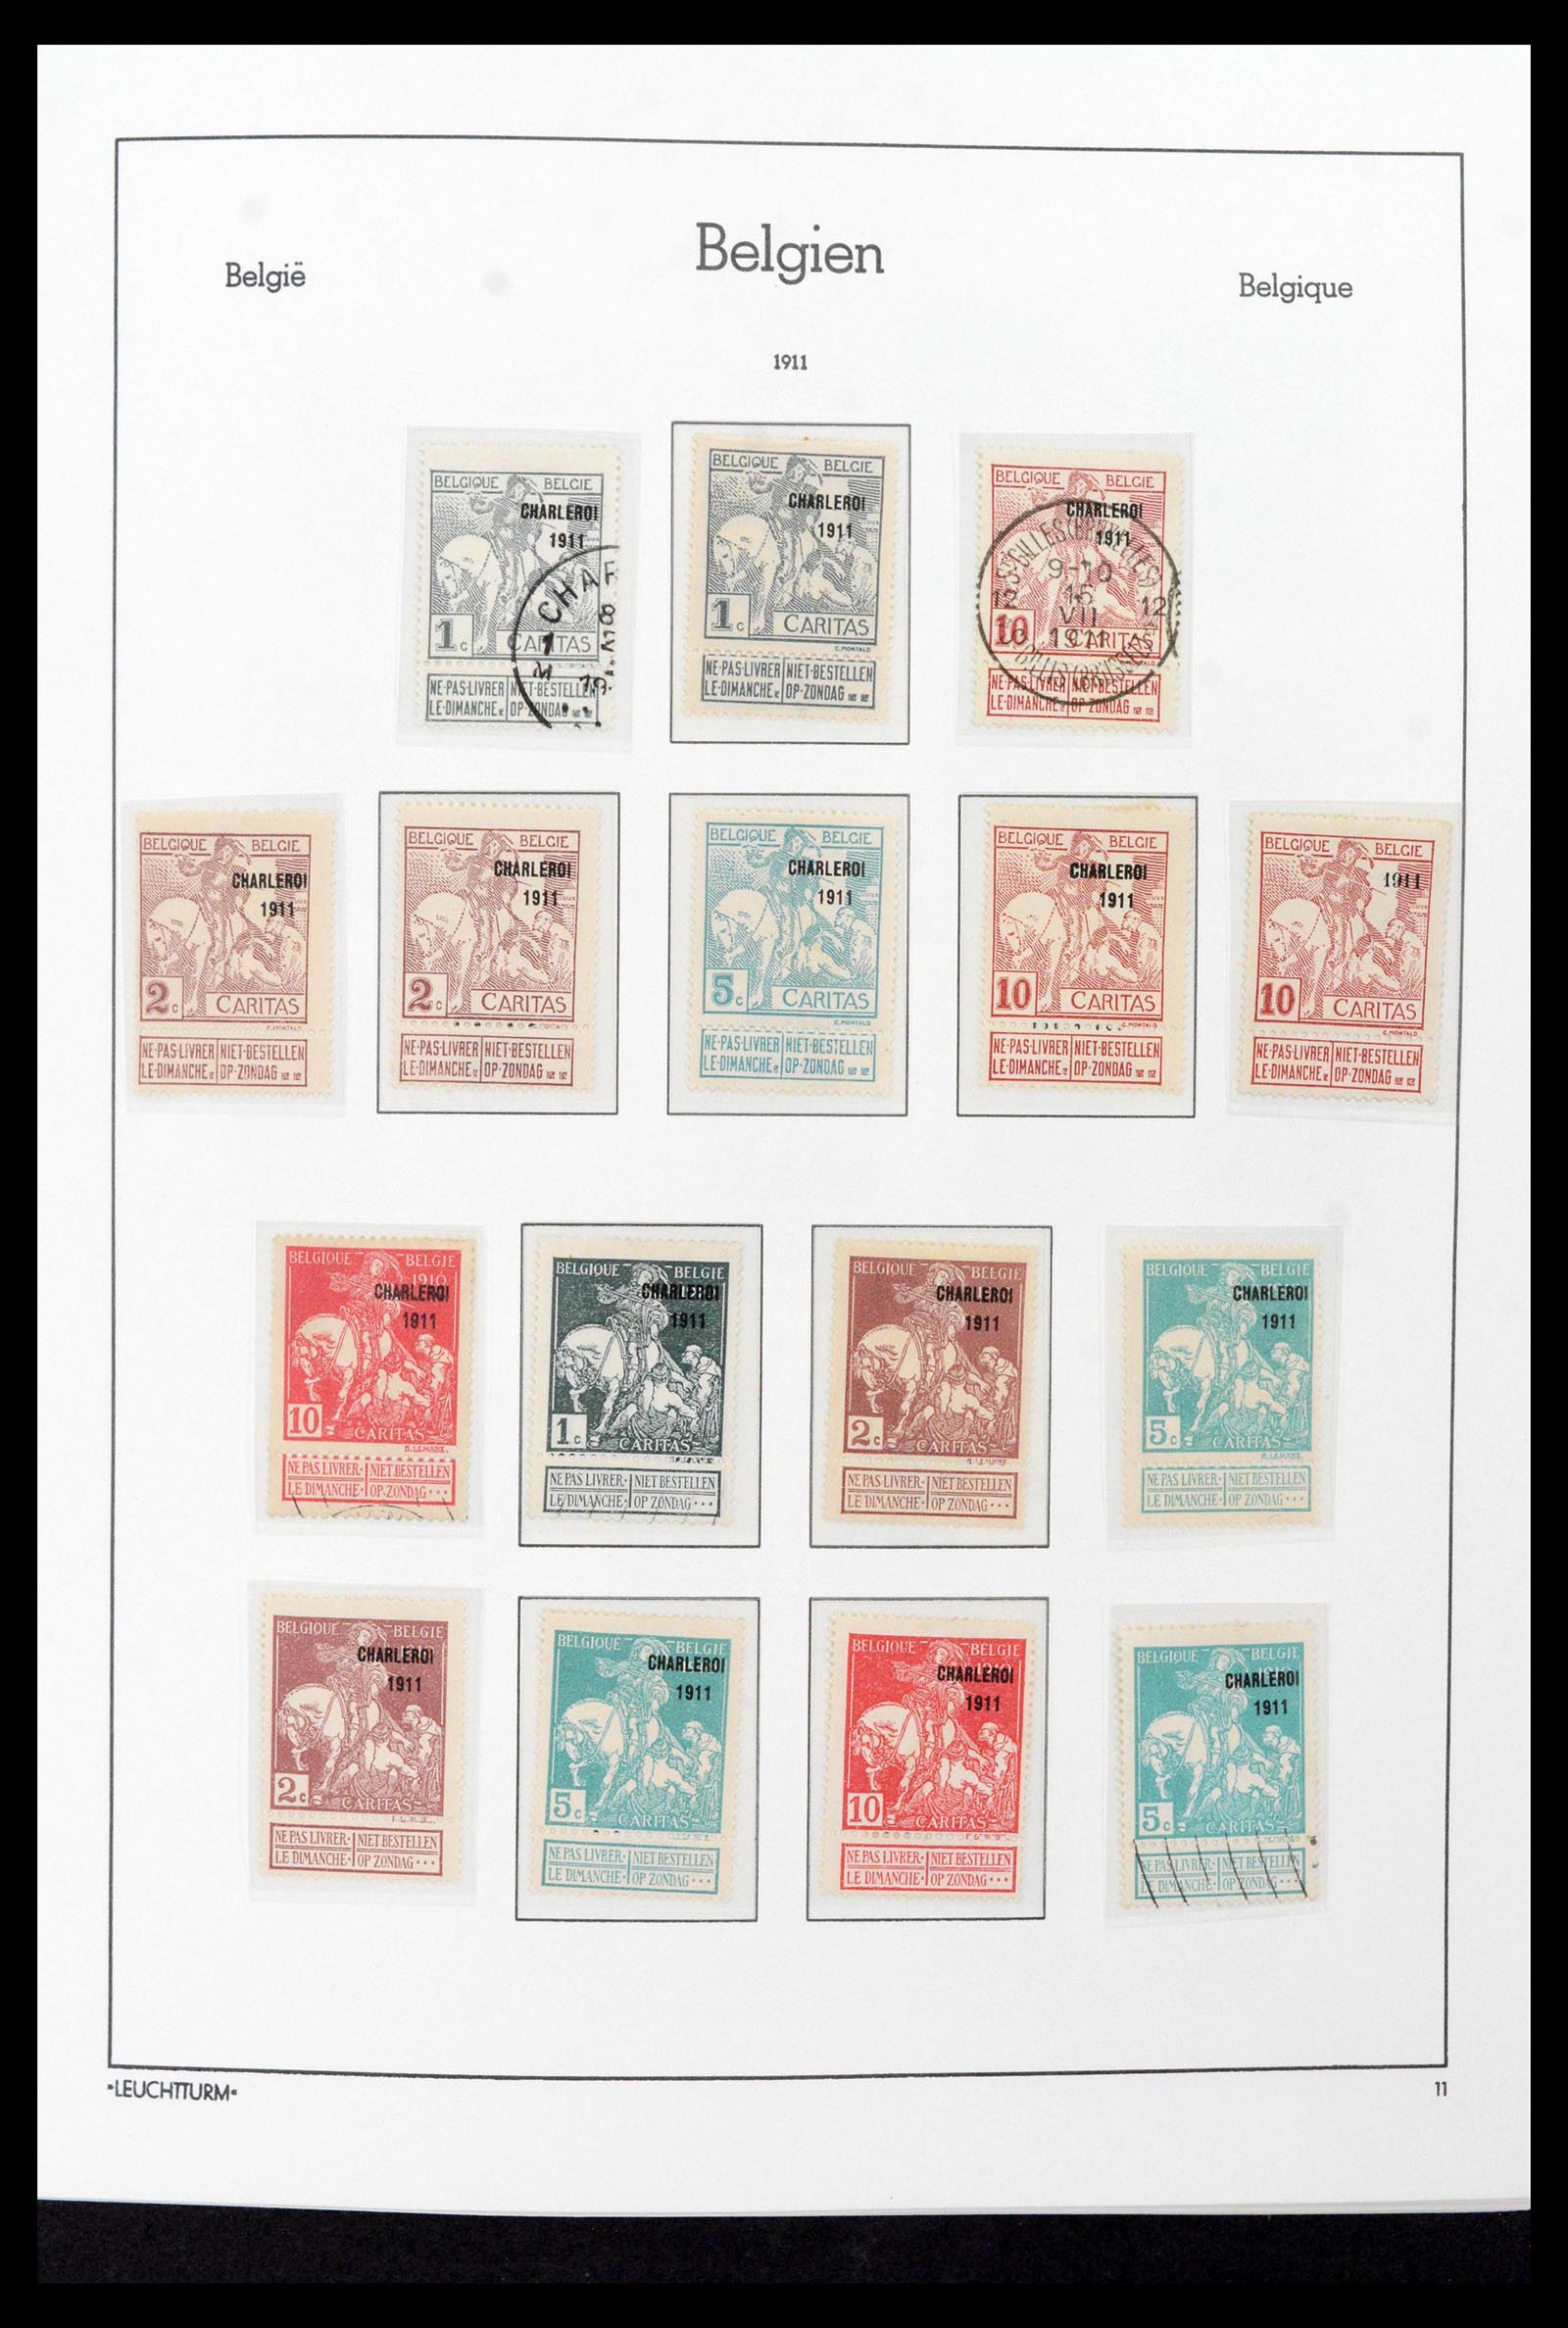 39137 0016 - Stamp collection 39137 Belgium 1849-2002.